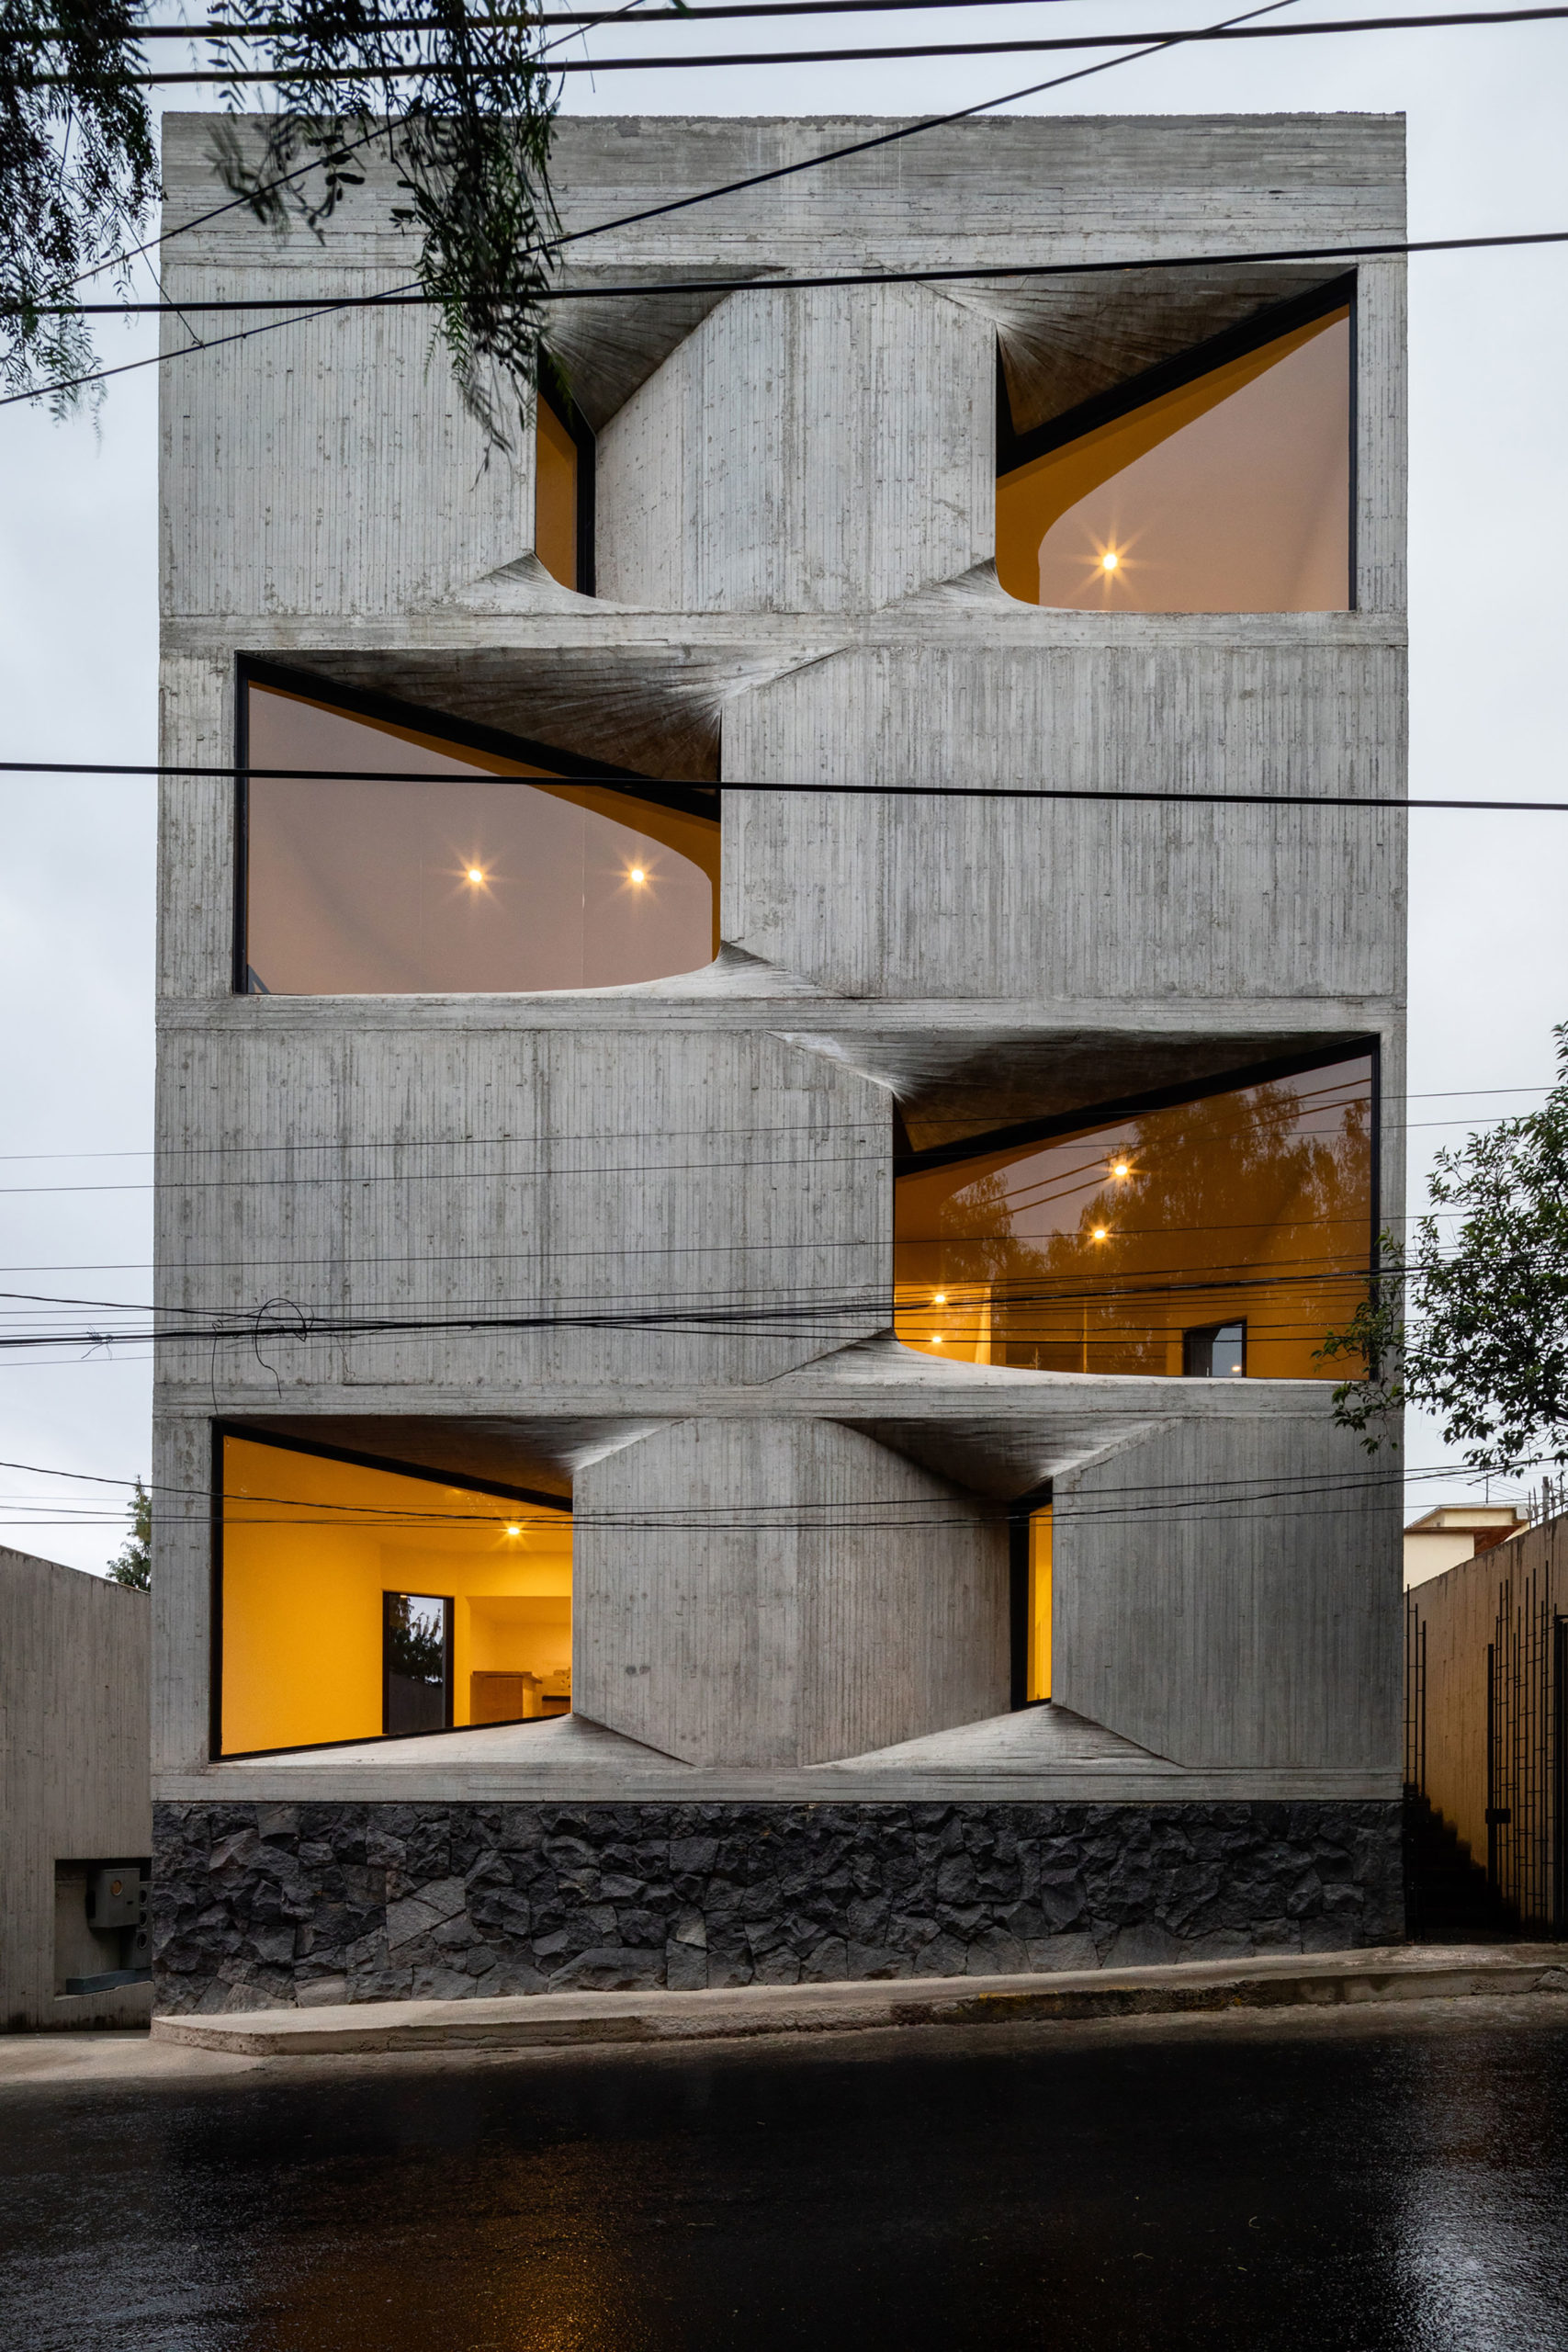 DL1310 Apartments. Architect: Young & Ayata. Associate Architect: Michan Architecture. Location: Mexico City, Mexico. Photo: Rafael Gamo.